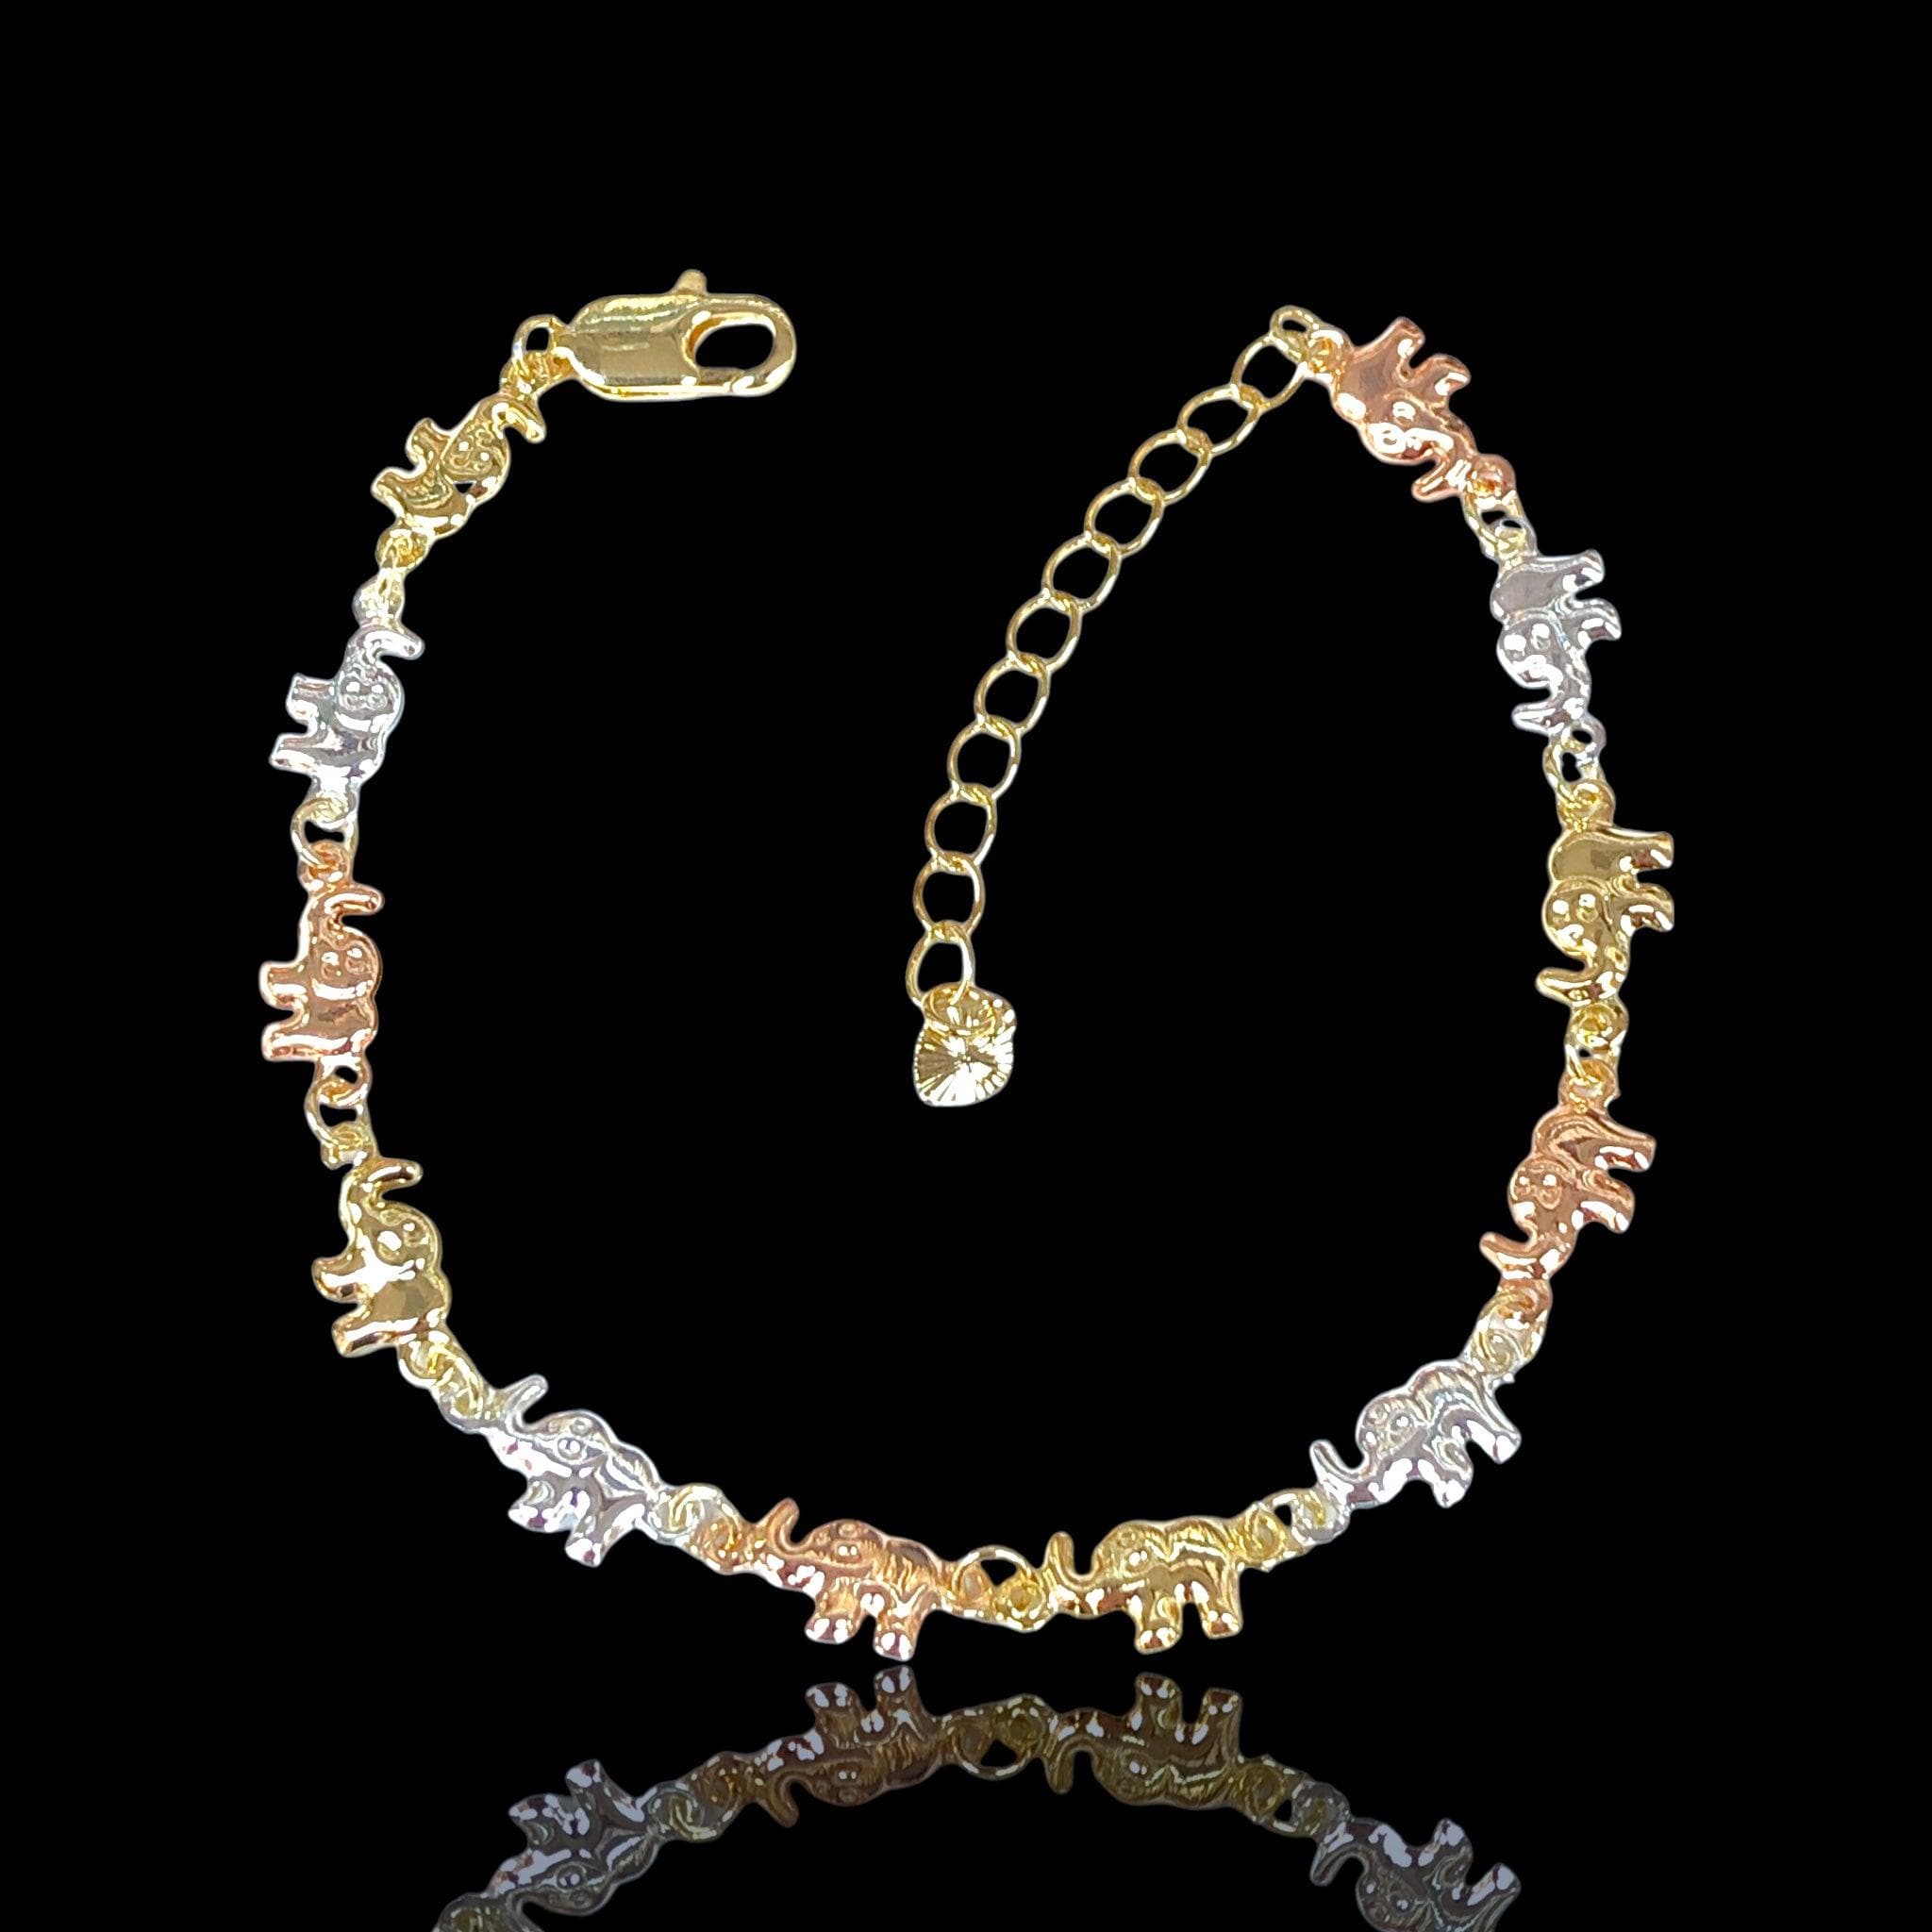 18K Gold-Filled Happy Elephant Bracelet- kuania oro laminado